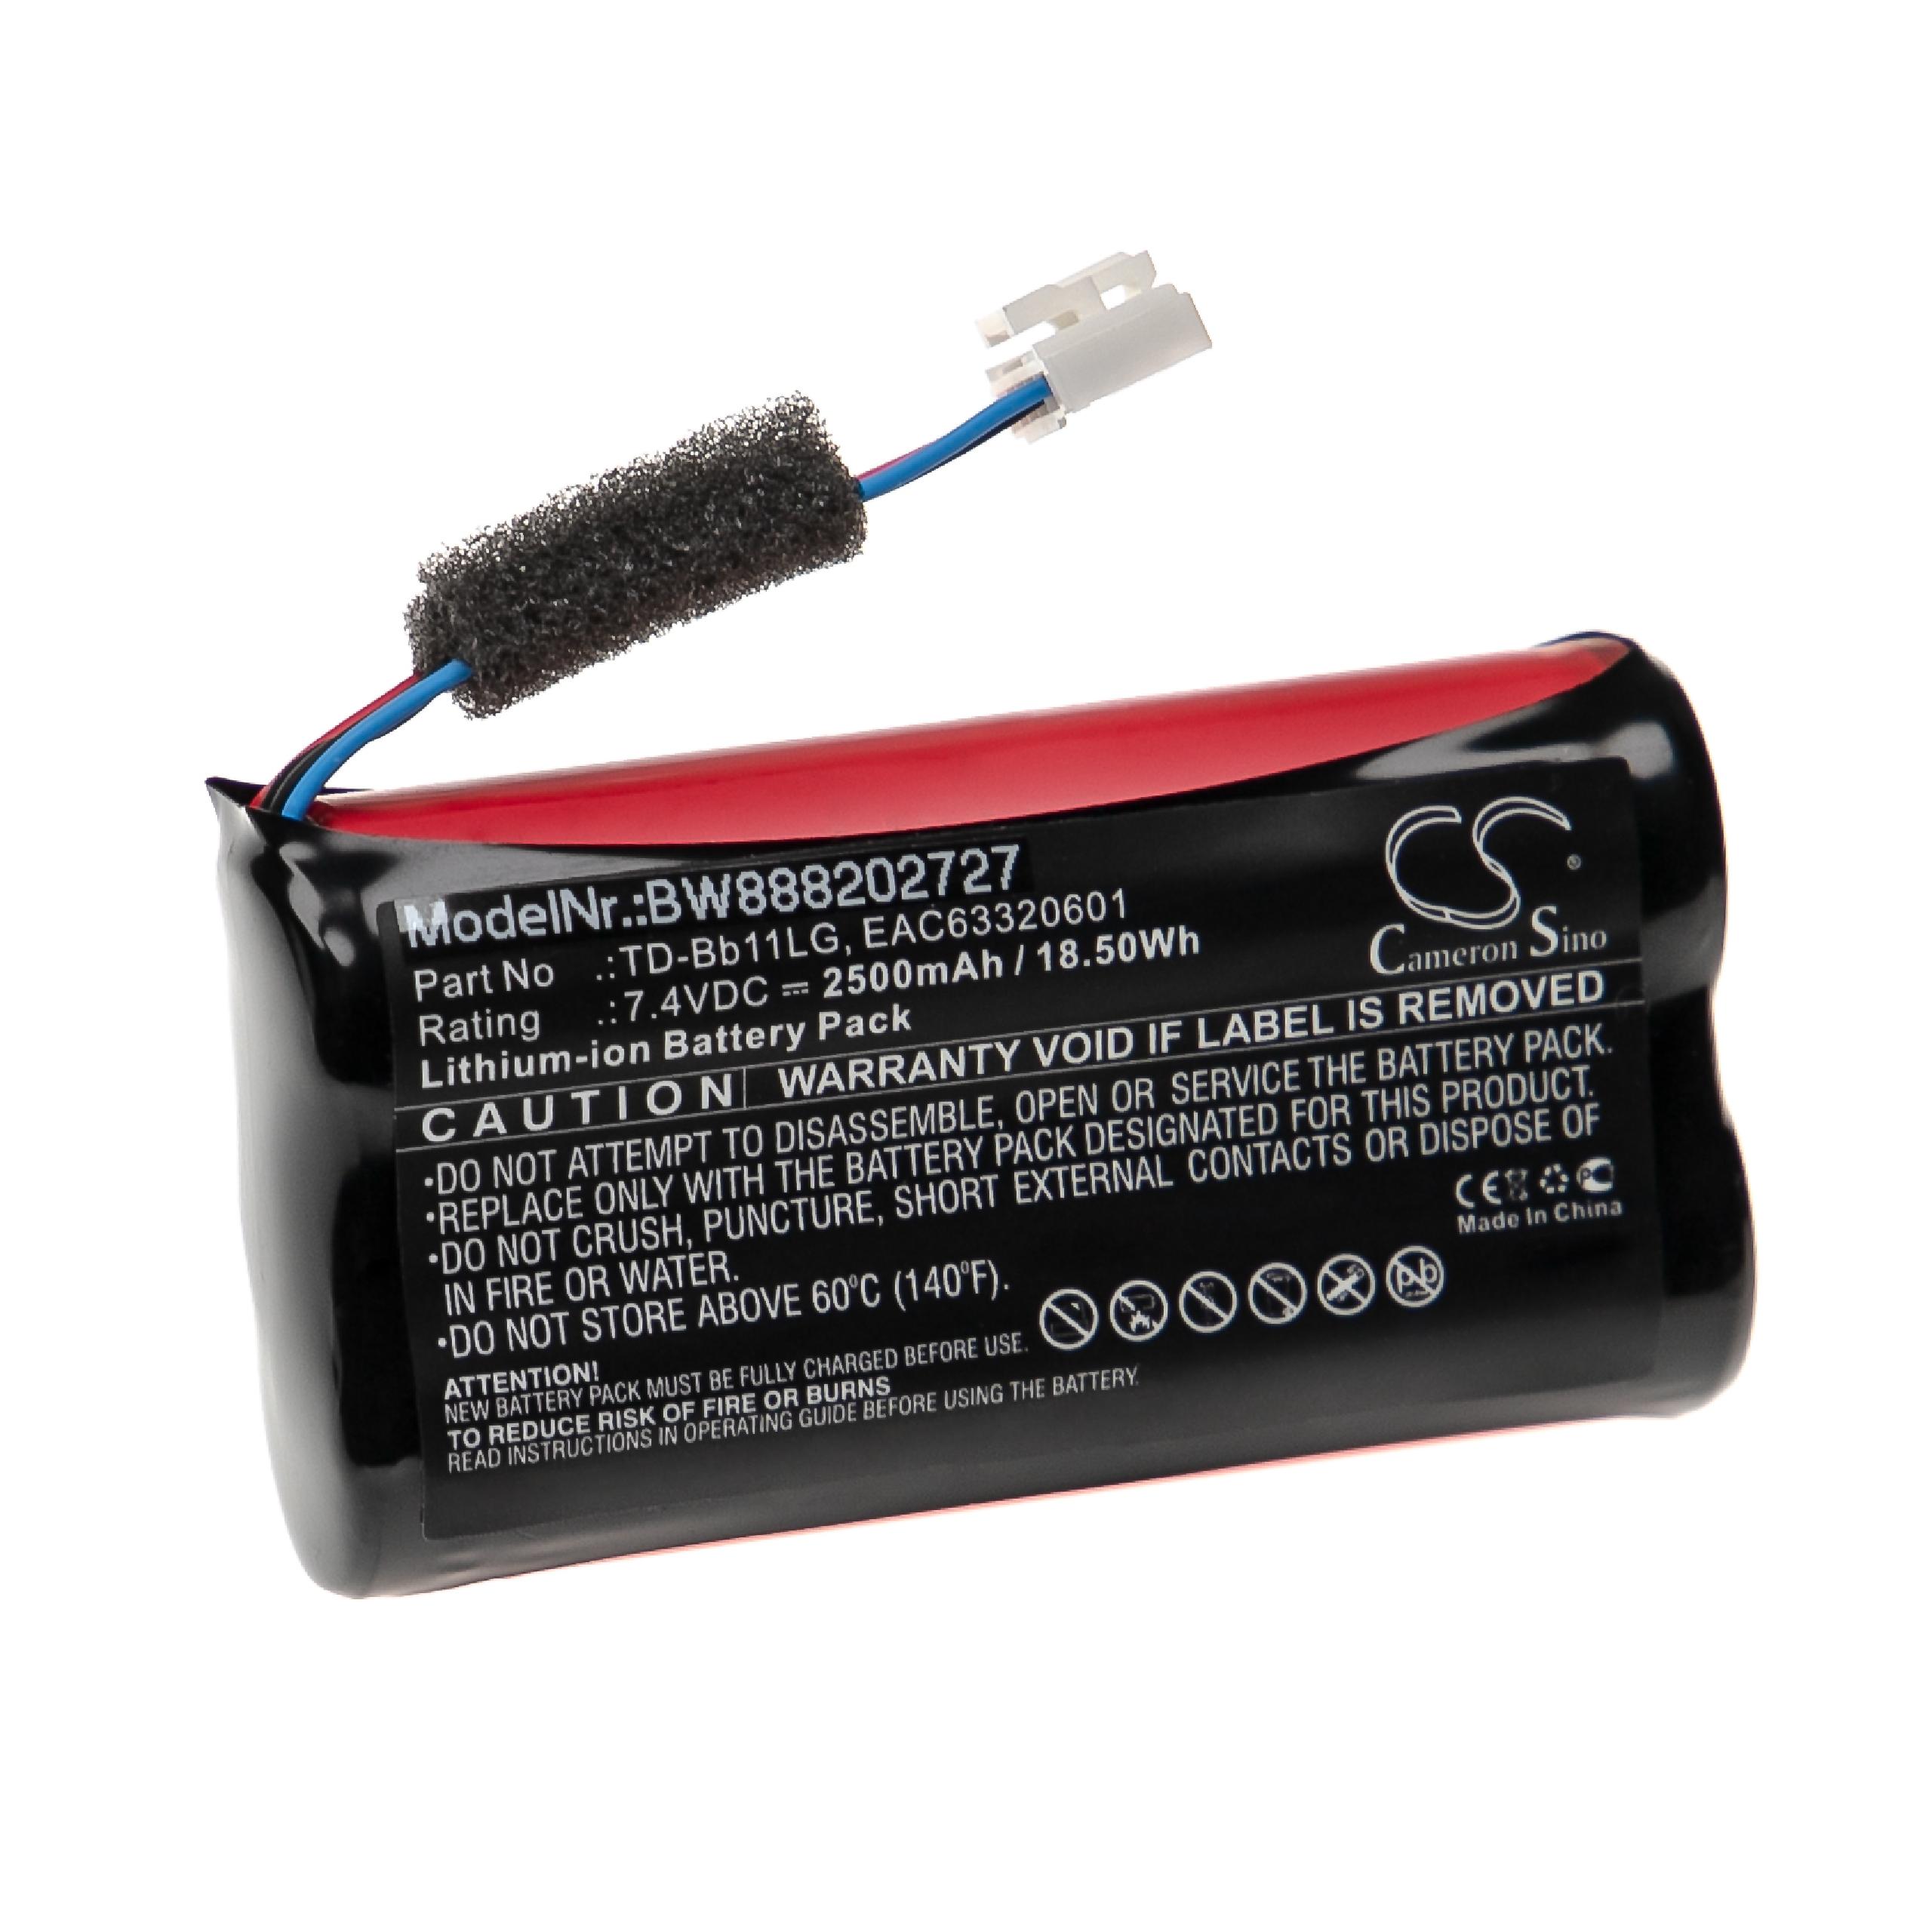 Akumulator do głośnika LG zamiennik LG EAC63918901, EAC63320601, TD-Bb11 - Li-Ion 2500mAh